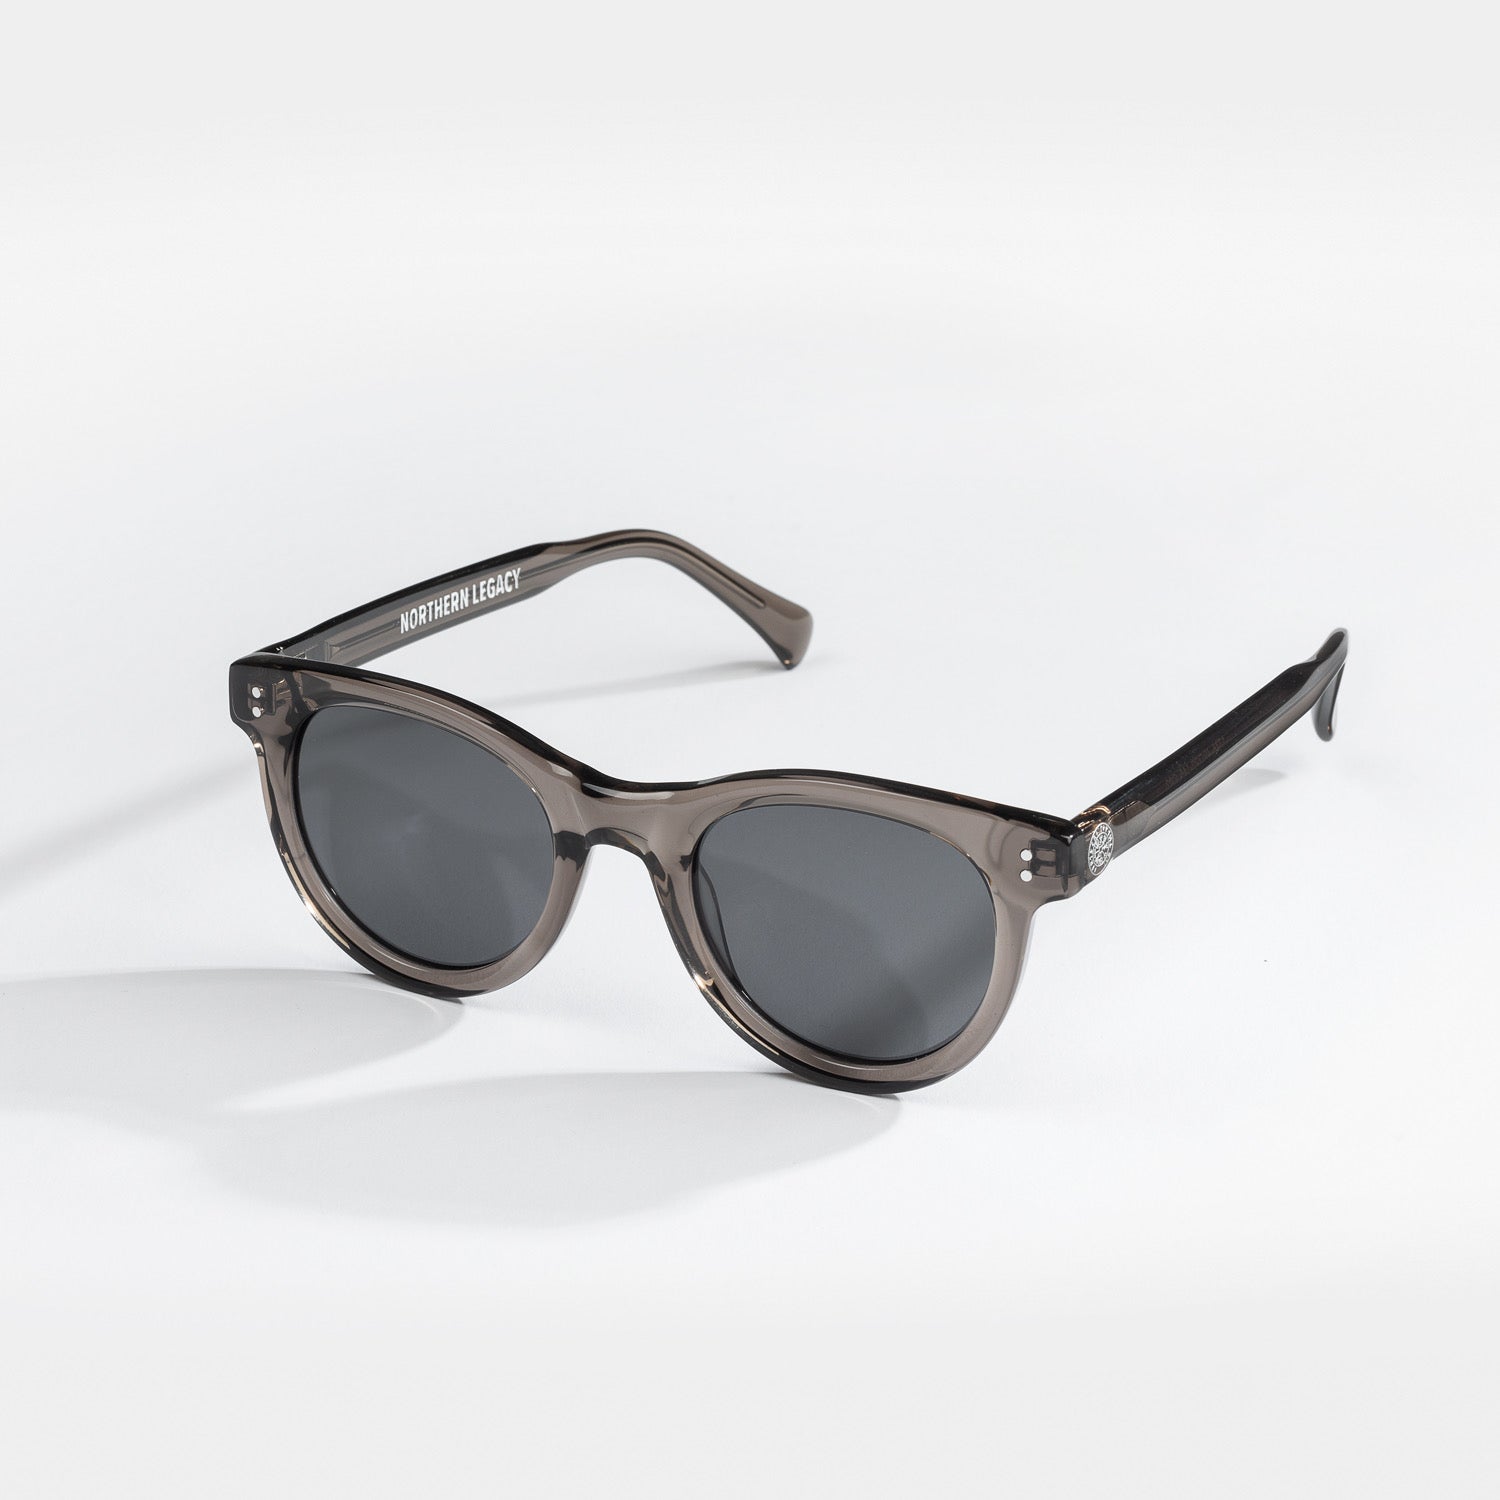 Classic sunglasses - Transparent grey